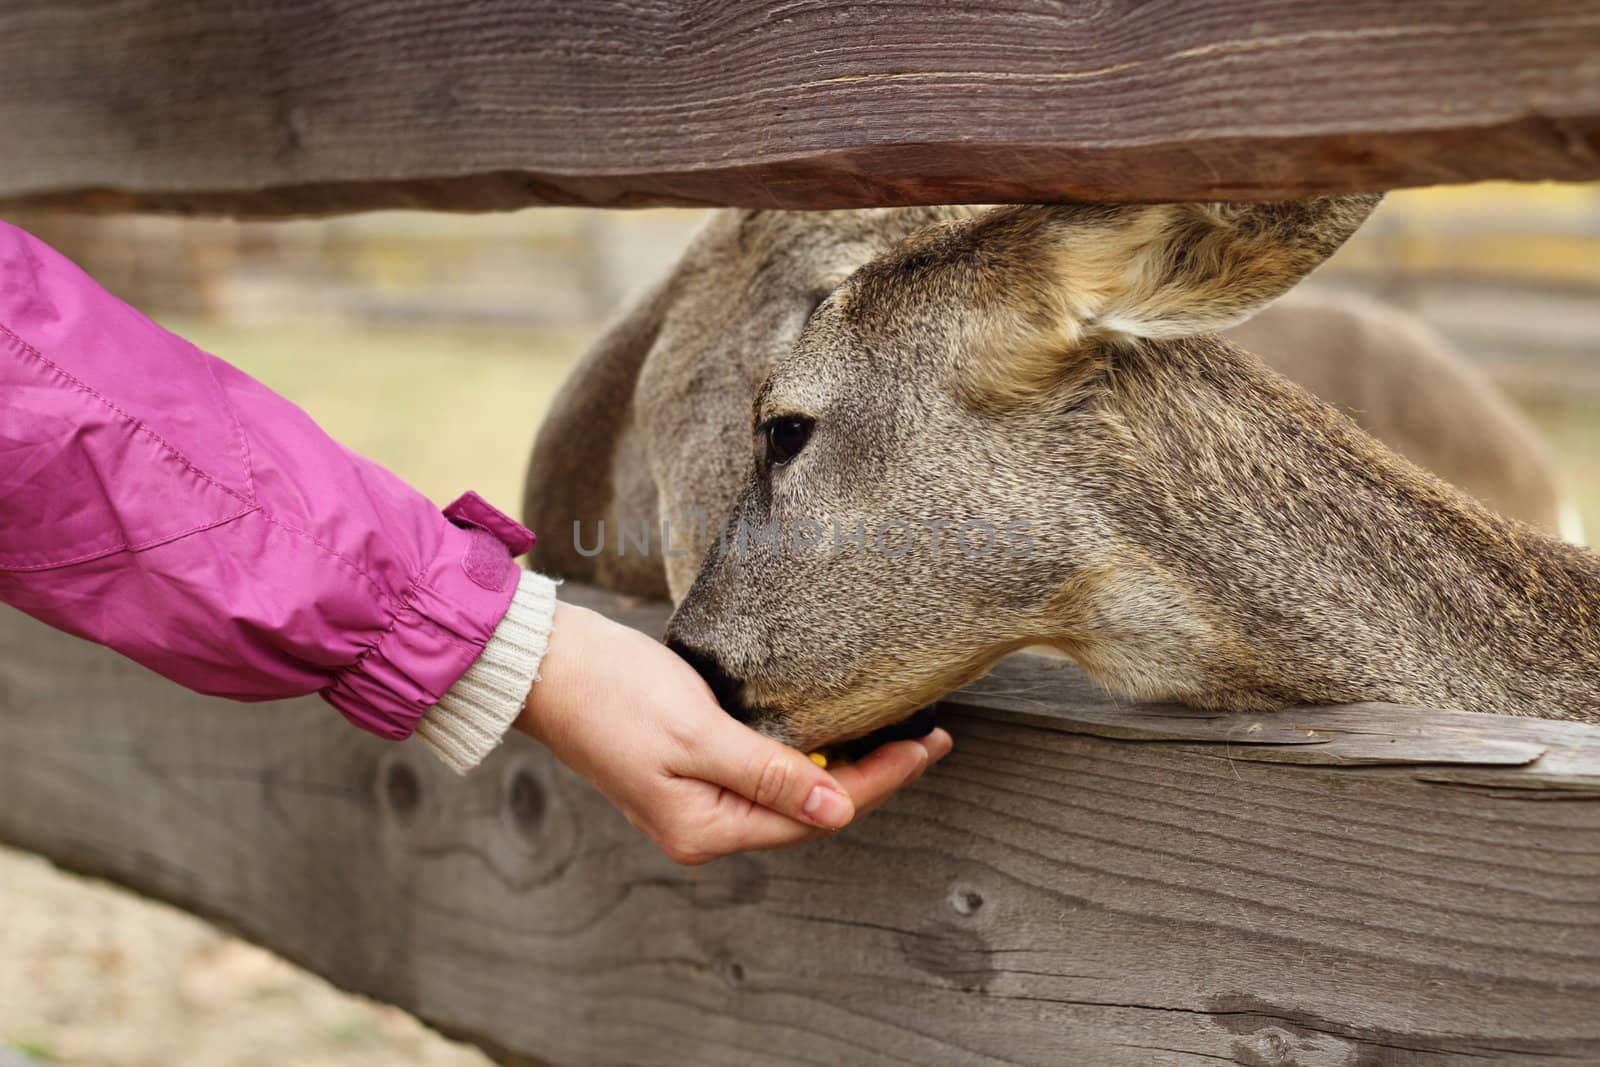 feeding deers at a farm by taviphoto